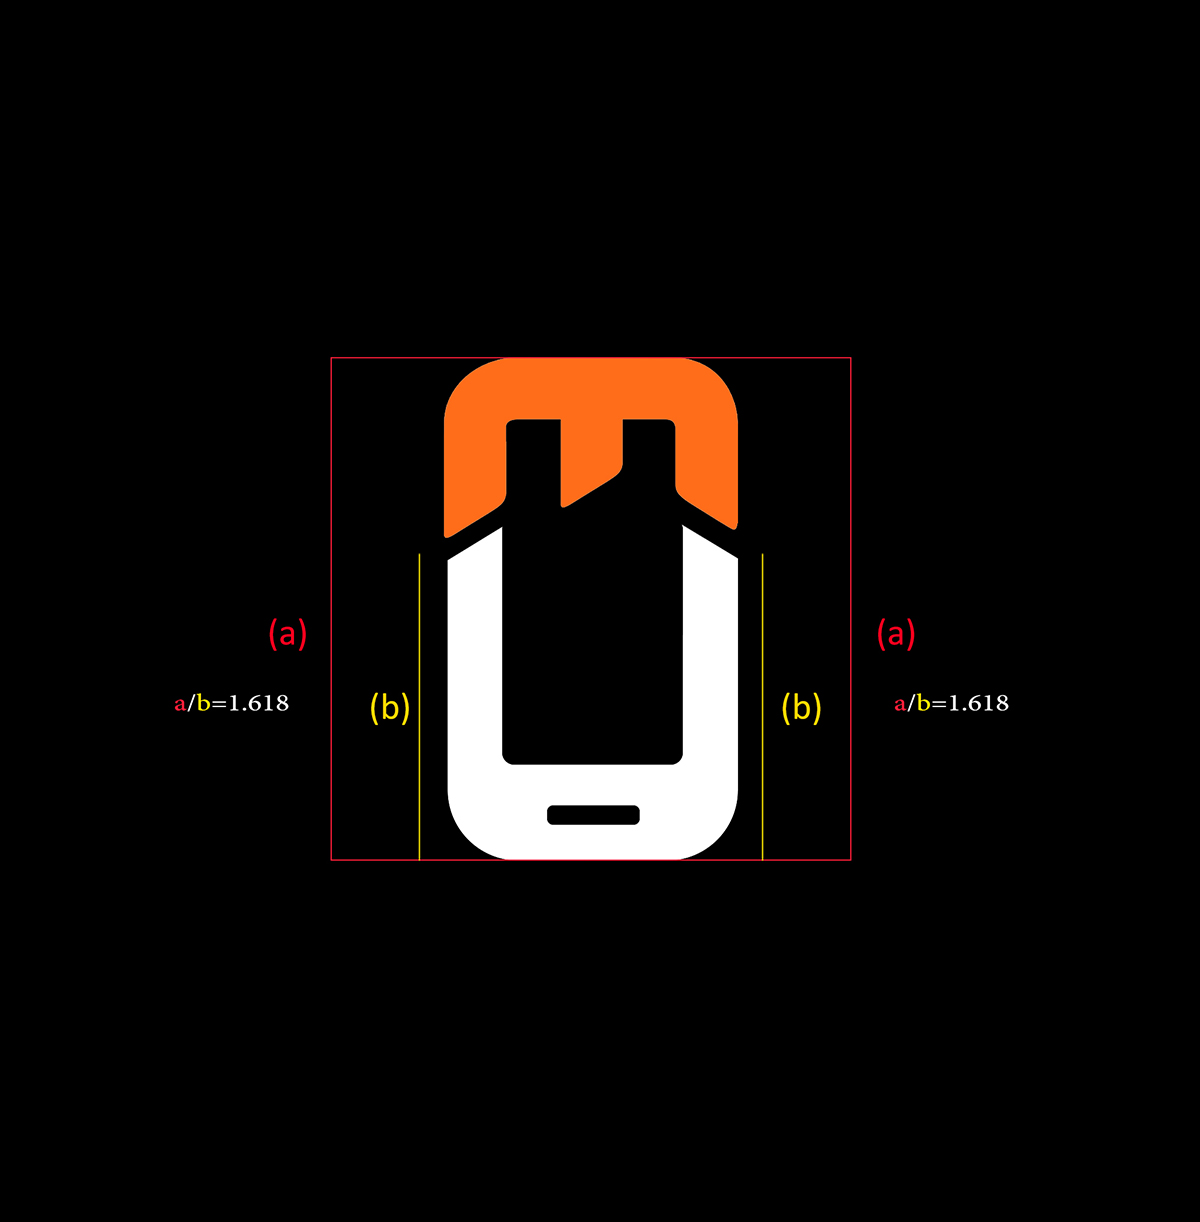 logo design for mobile shop